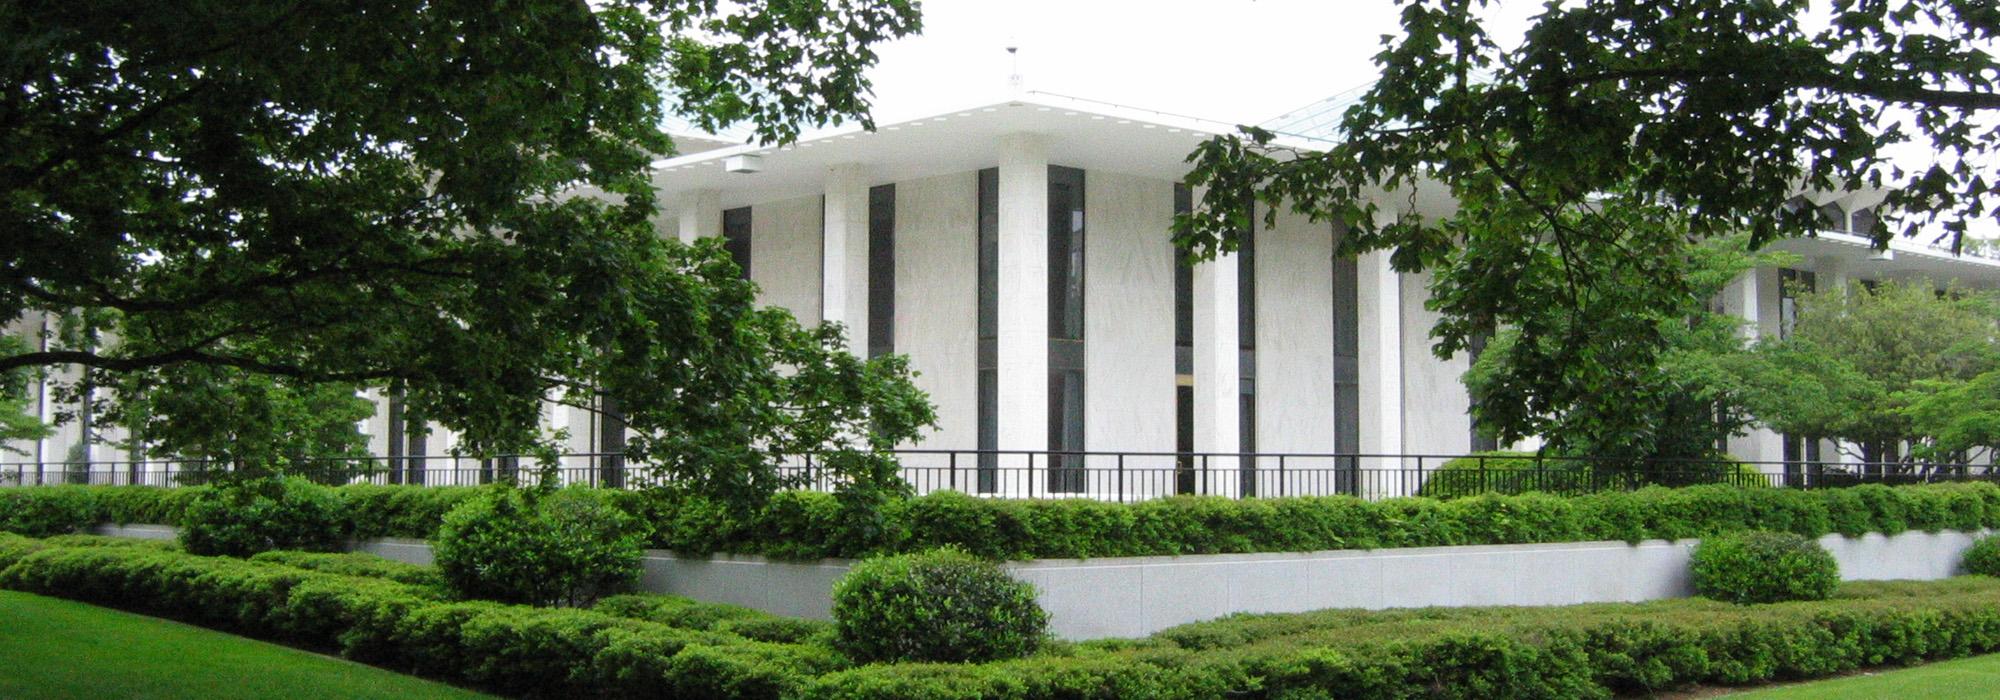 North Carolina Legislative Building and Grounds, Raleigh, NC